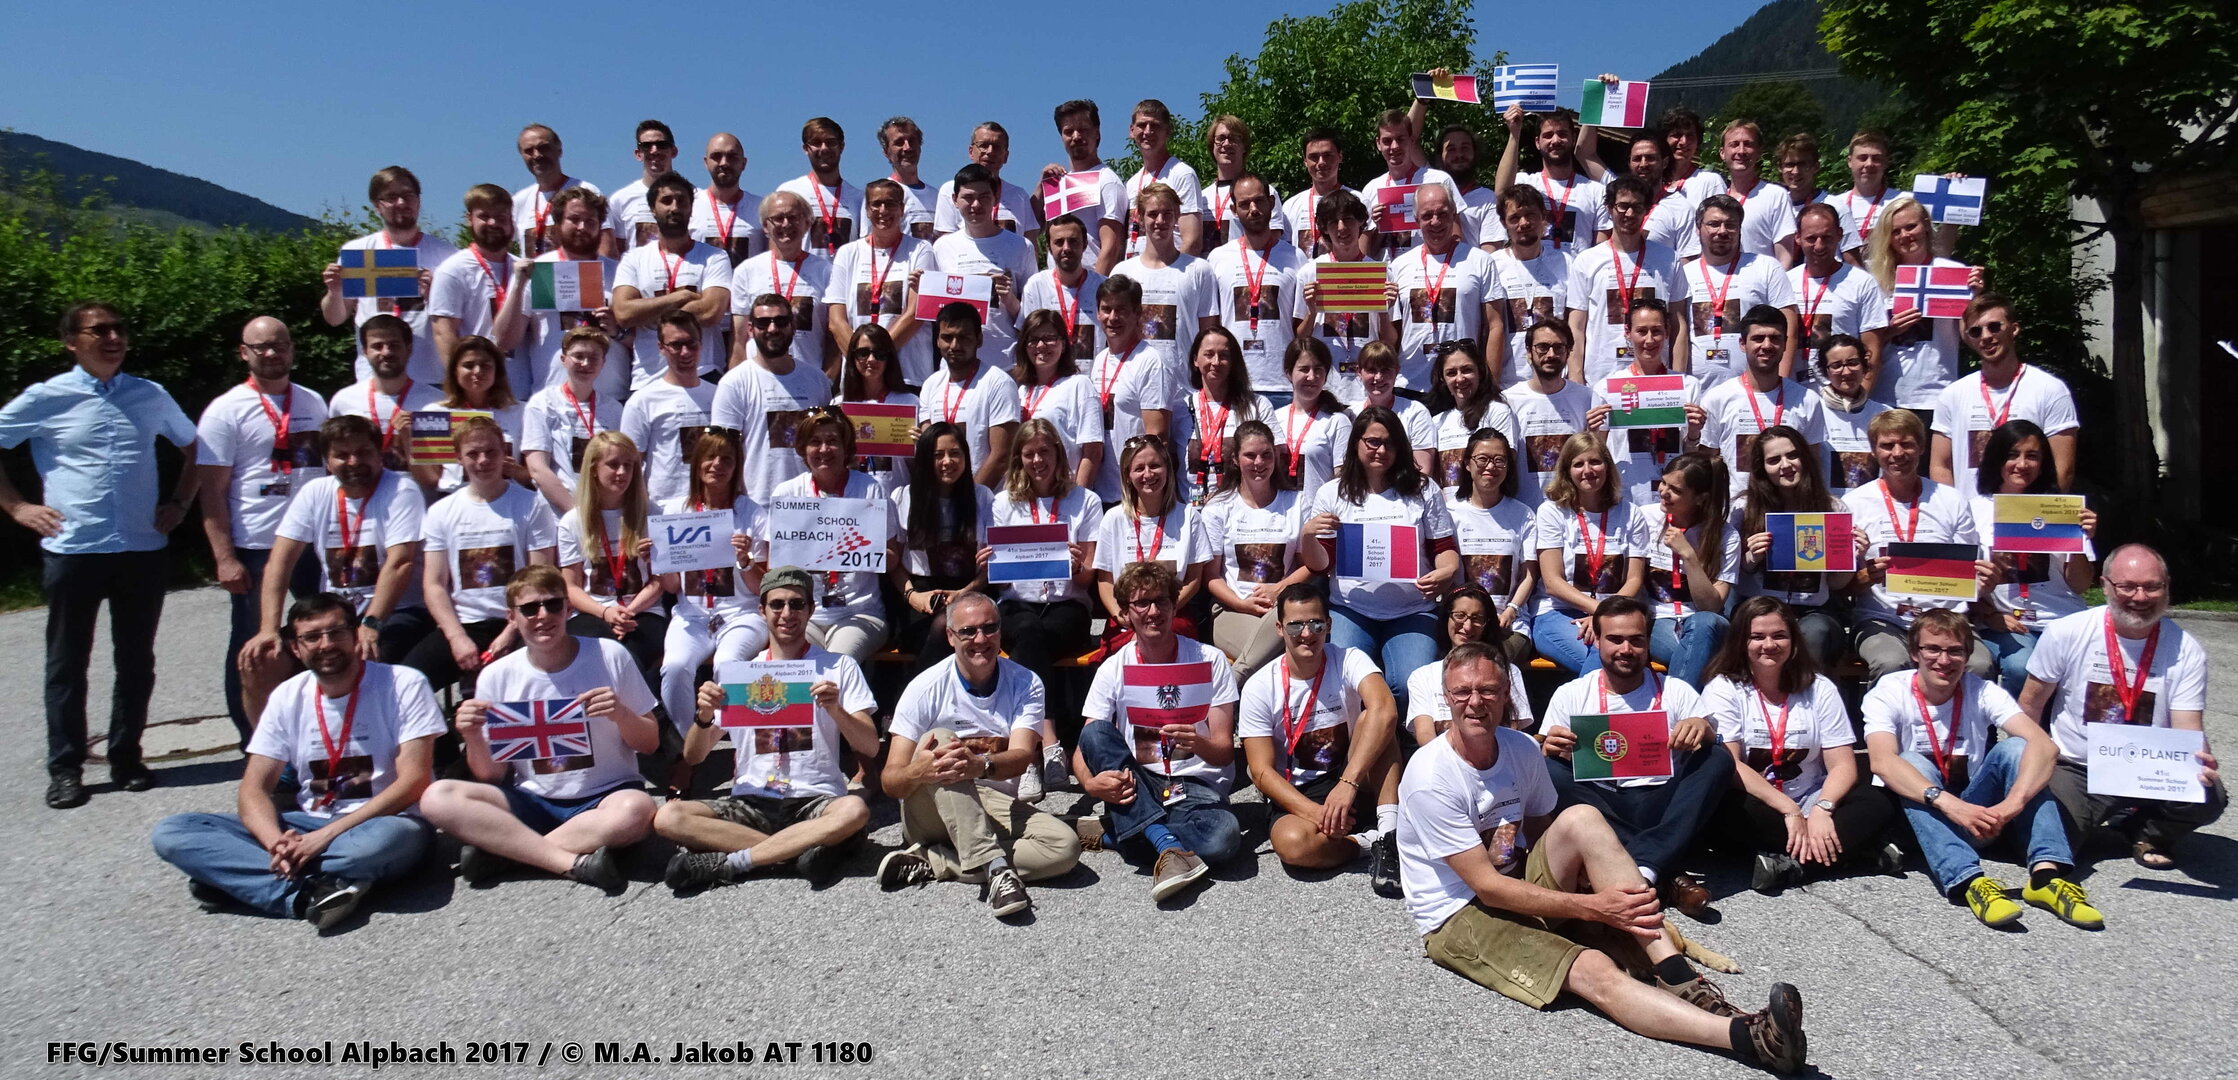 Alpbach Summer School 2017 participants